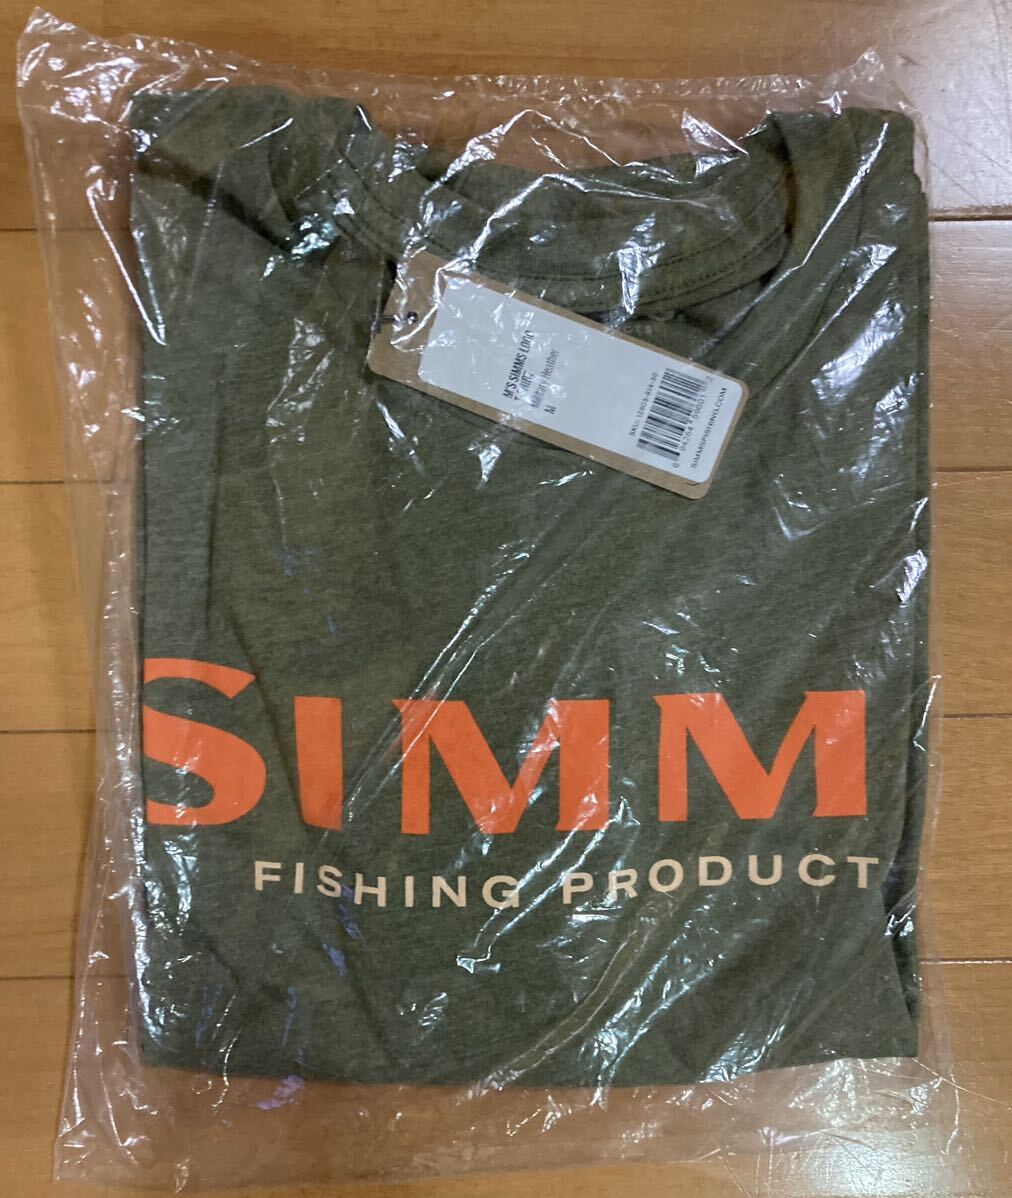 Simms シムス 半袖 Tシャツ M 新品 T-shirt 大きめ メンズ オリーブ フィッシング シムズ 日本未発売 釣り